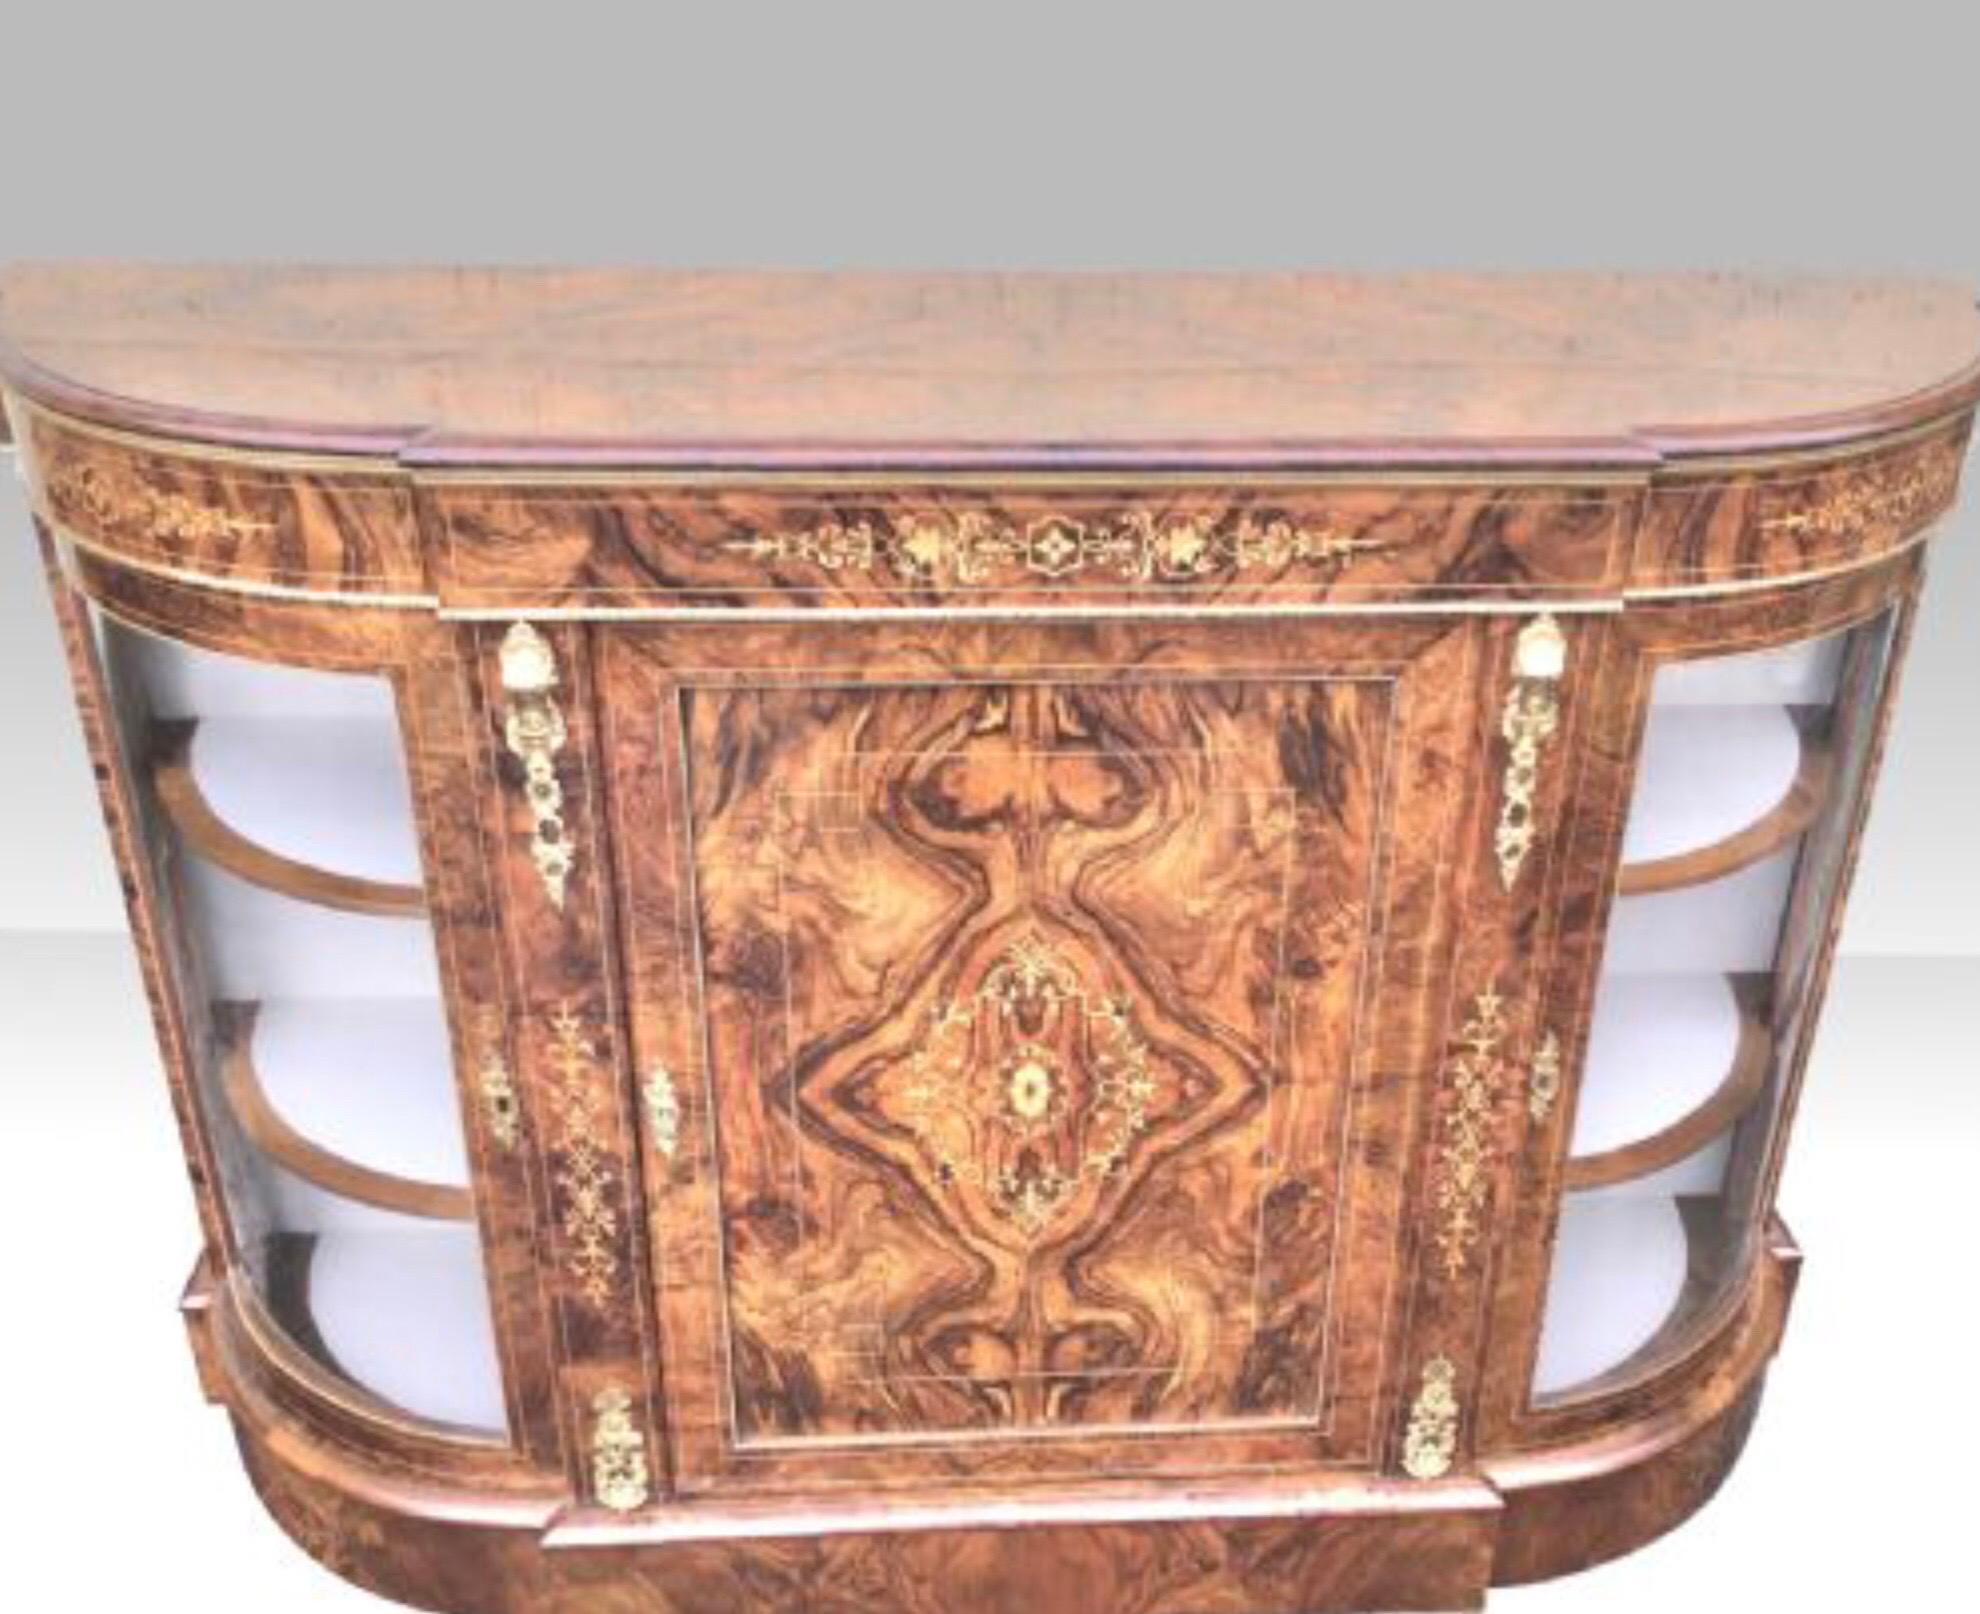 British Antique Burr Walnut and Gilt Ormolu Mounted Antique Credenza Cabinet Sideboard For Sale